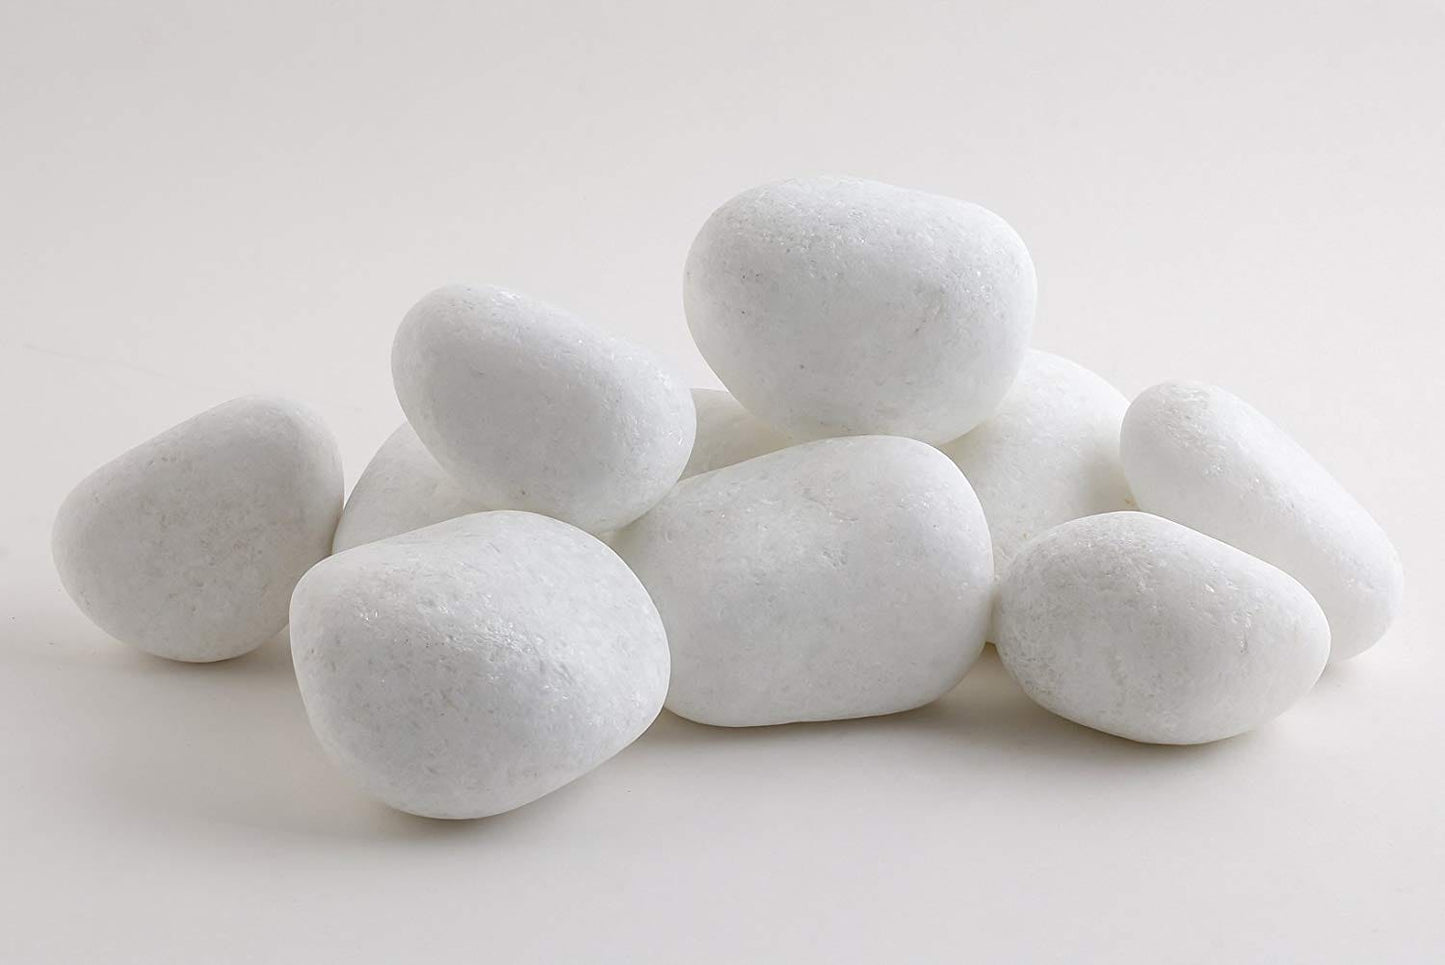 StonesForever Snow-White Stones (15 Kgs, 2-3 Inches)